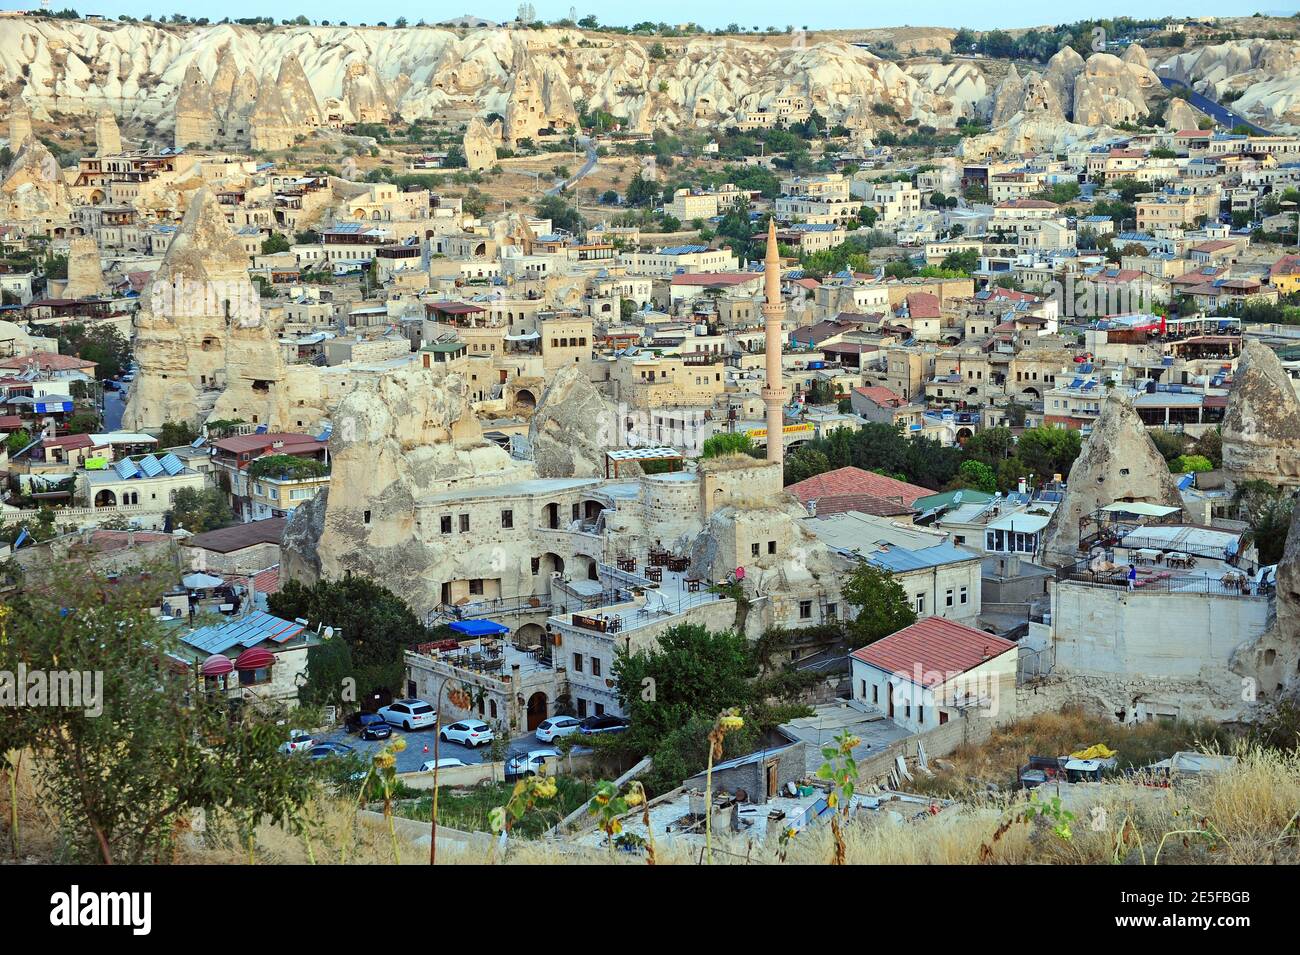 Top view of Goreme historical town in Turkey, Cappadocia Stock Photo